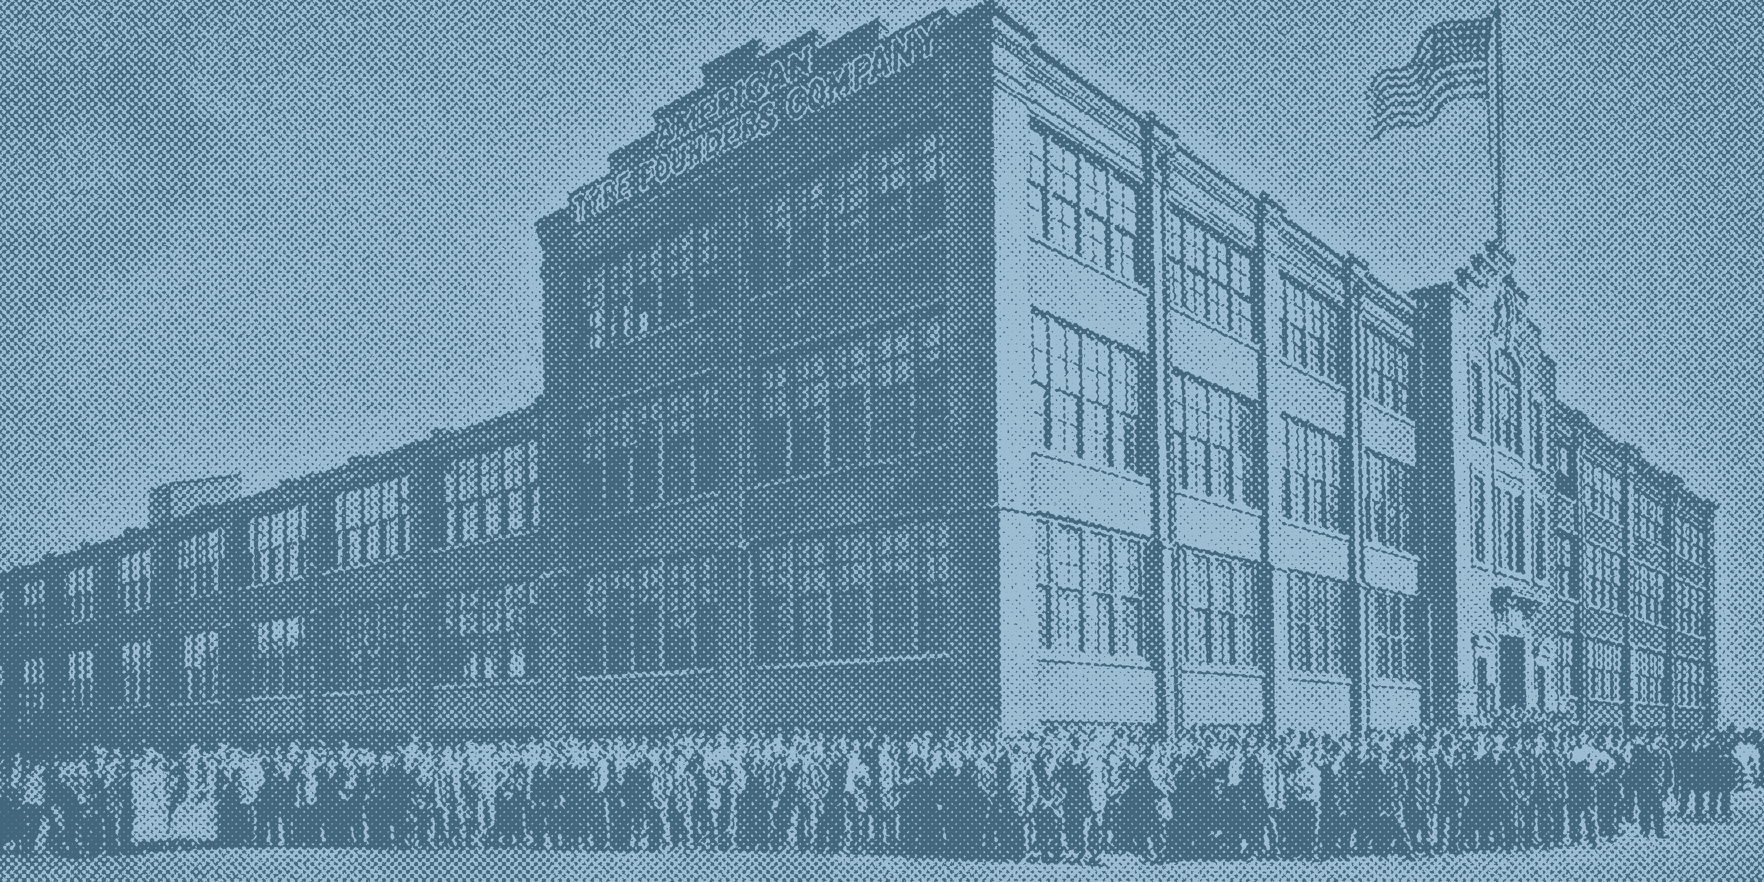 ATF Central Plant, Jersey City, New Jersey, 1911